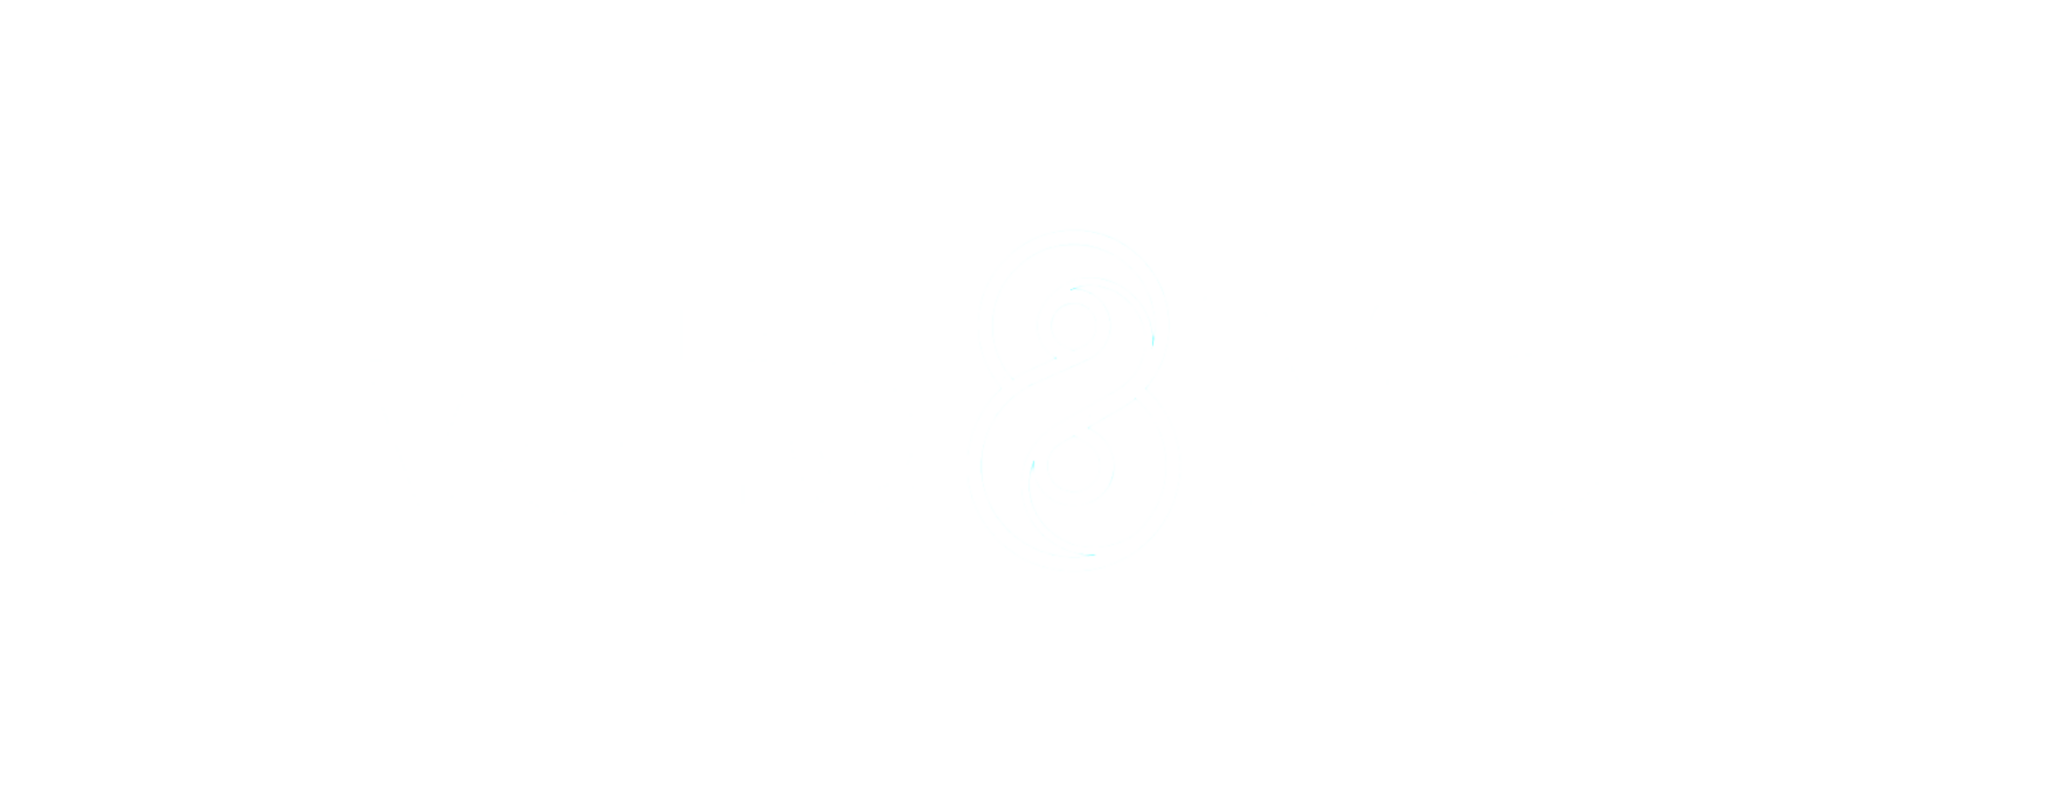 valid8me logo